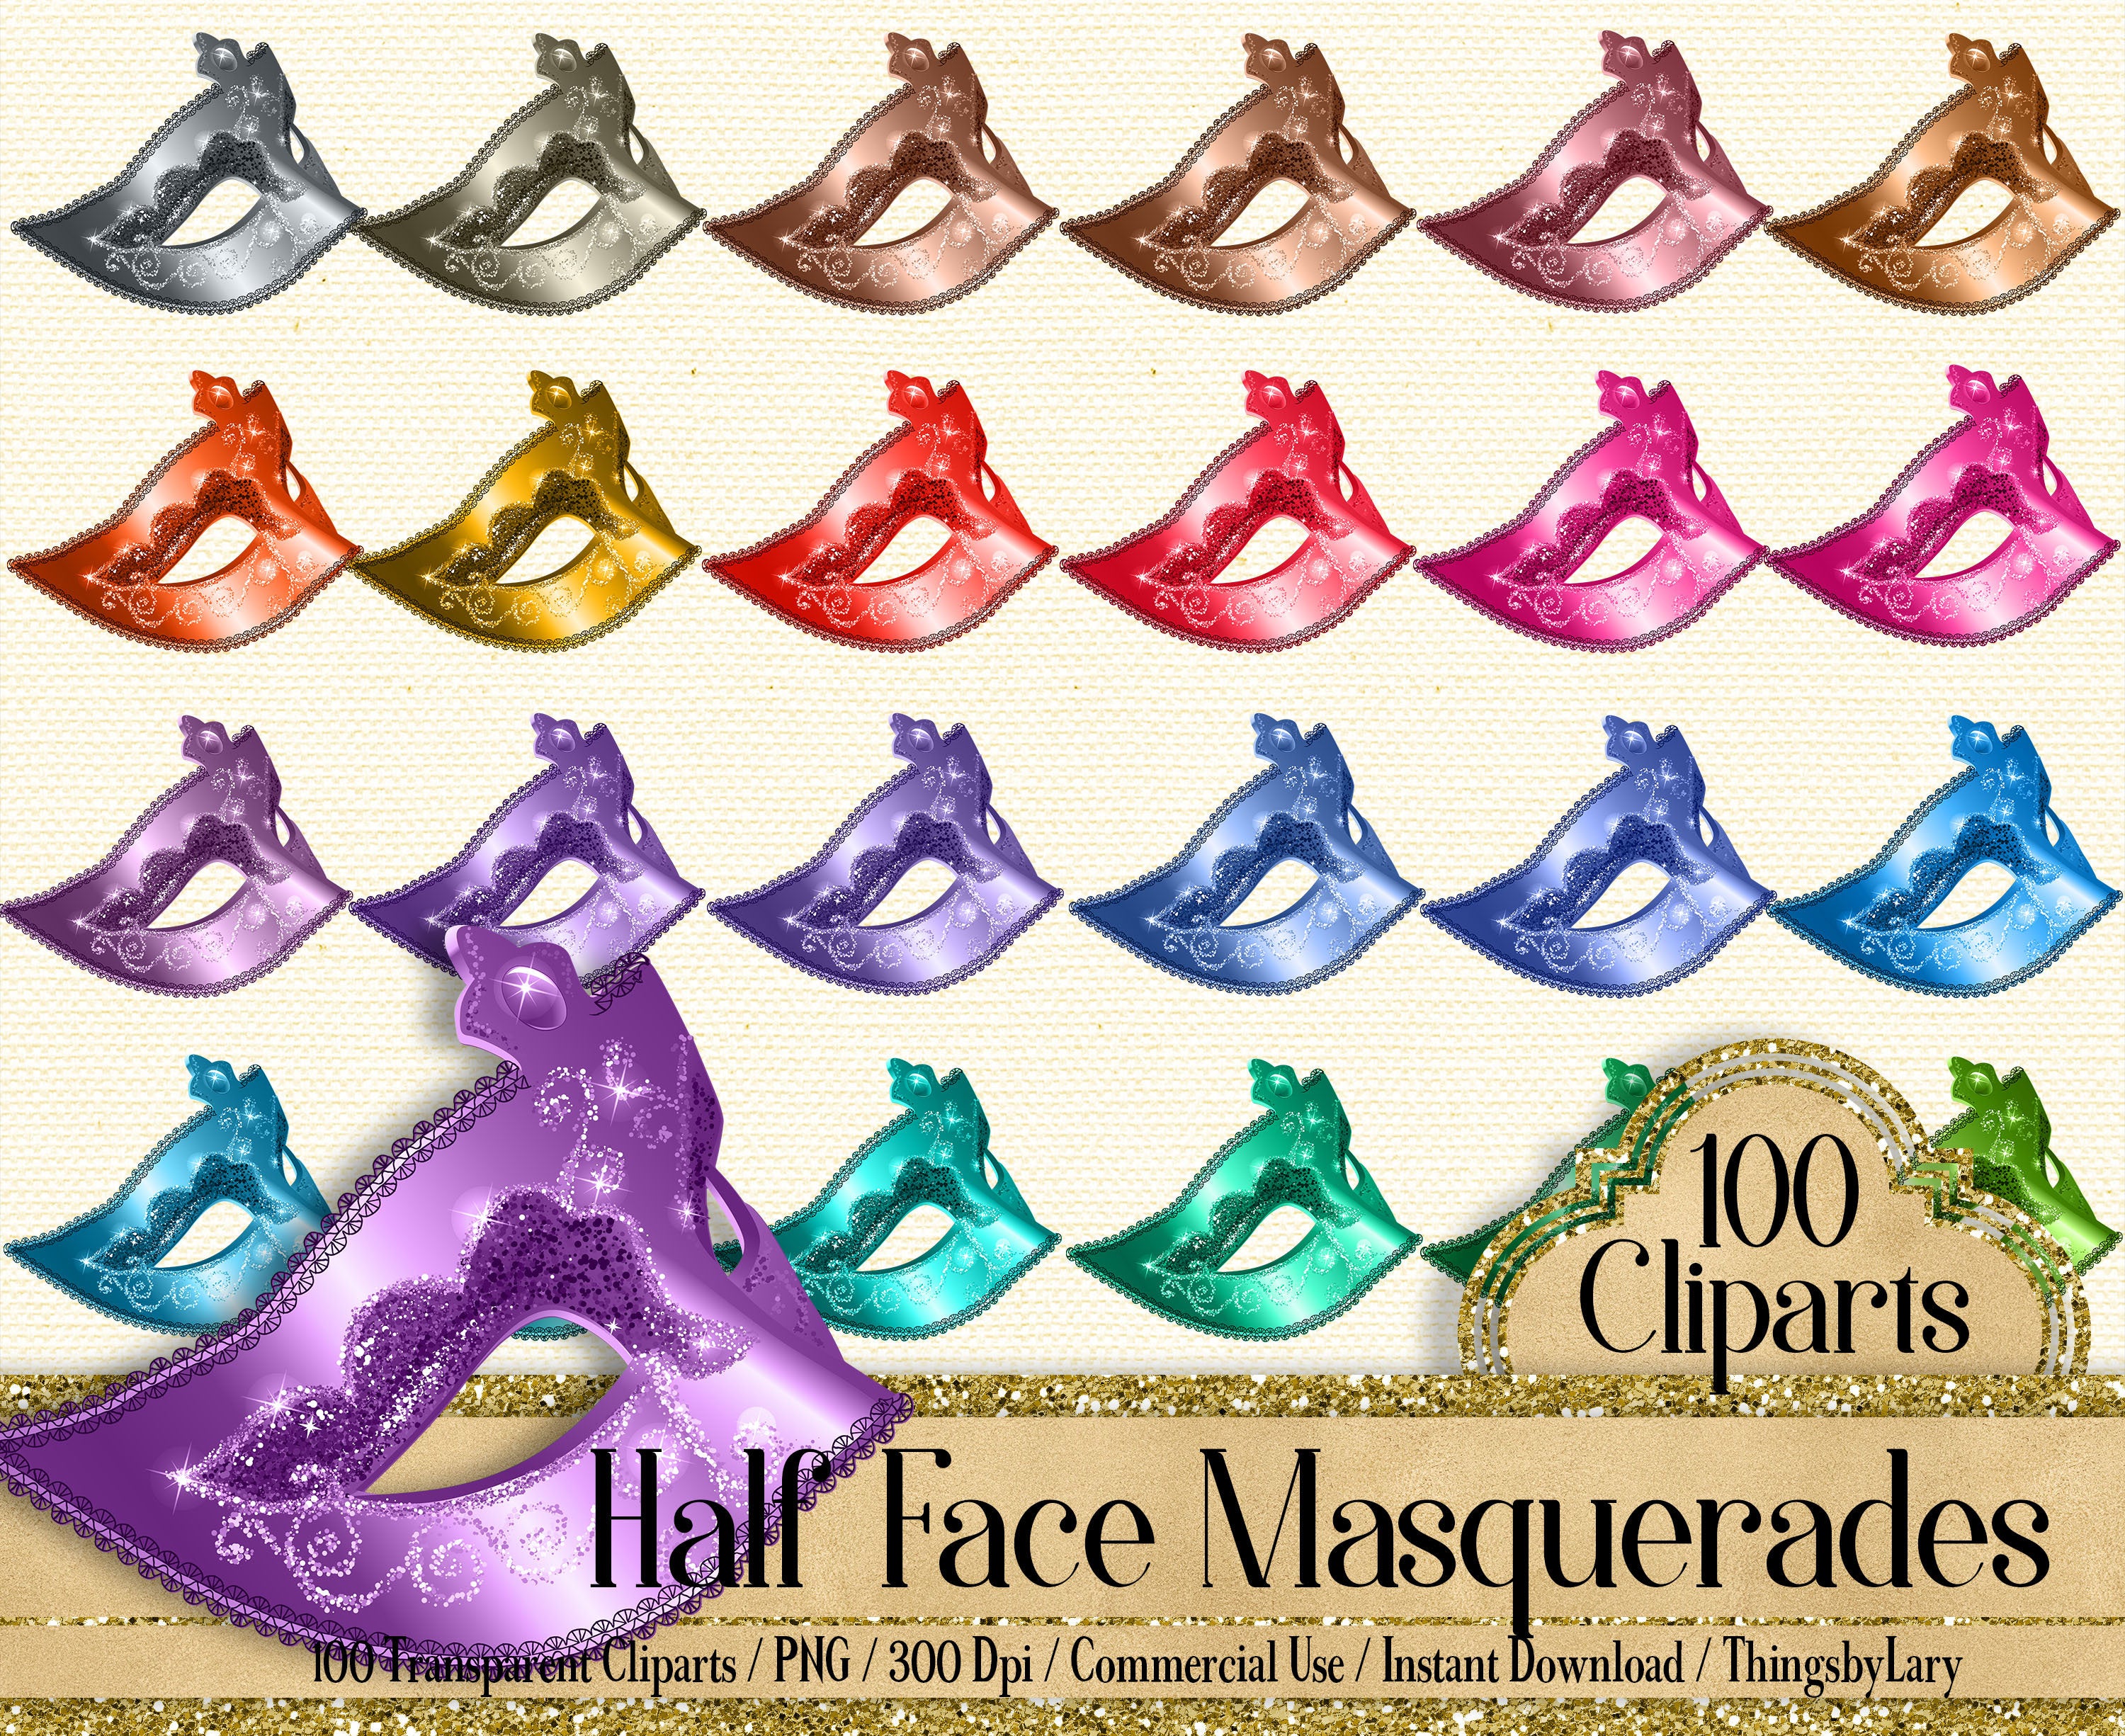 100 Half Face Masquerade Cliparts, Fashion Cliparts 300 Dpi Instant Download Commercial Use, Festival Mask, Scrapbook Theatre Kit,